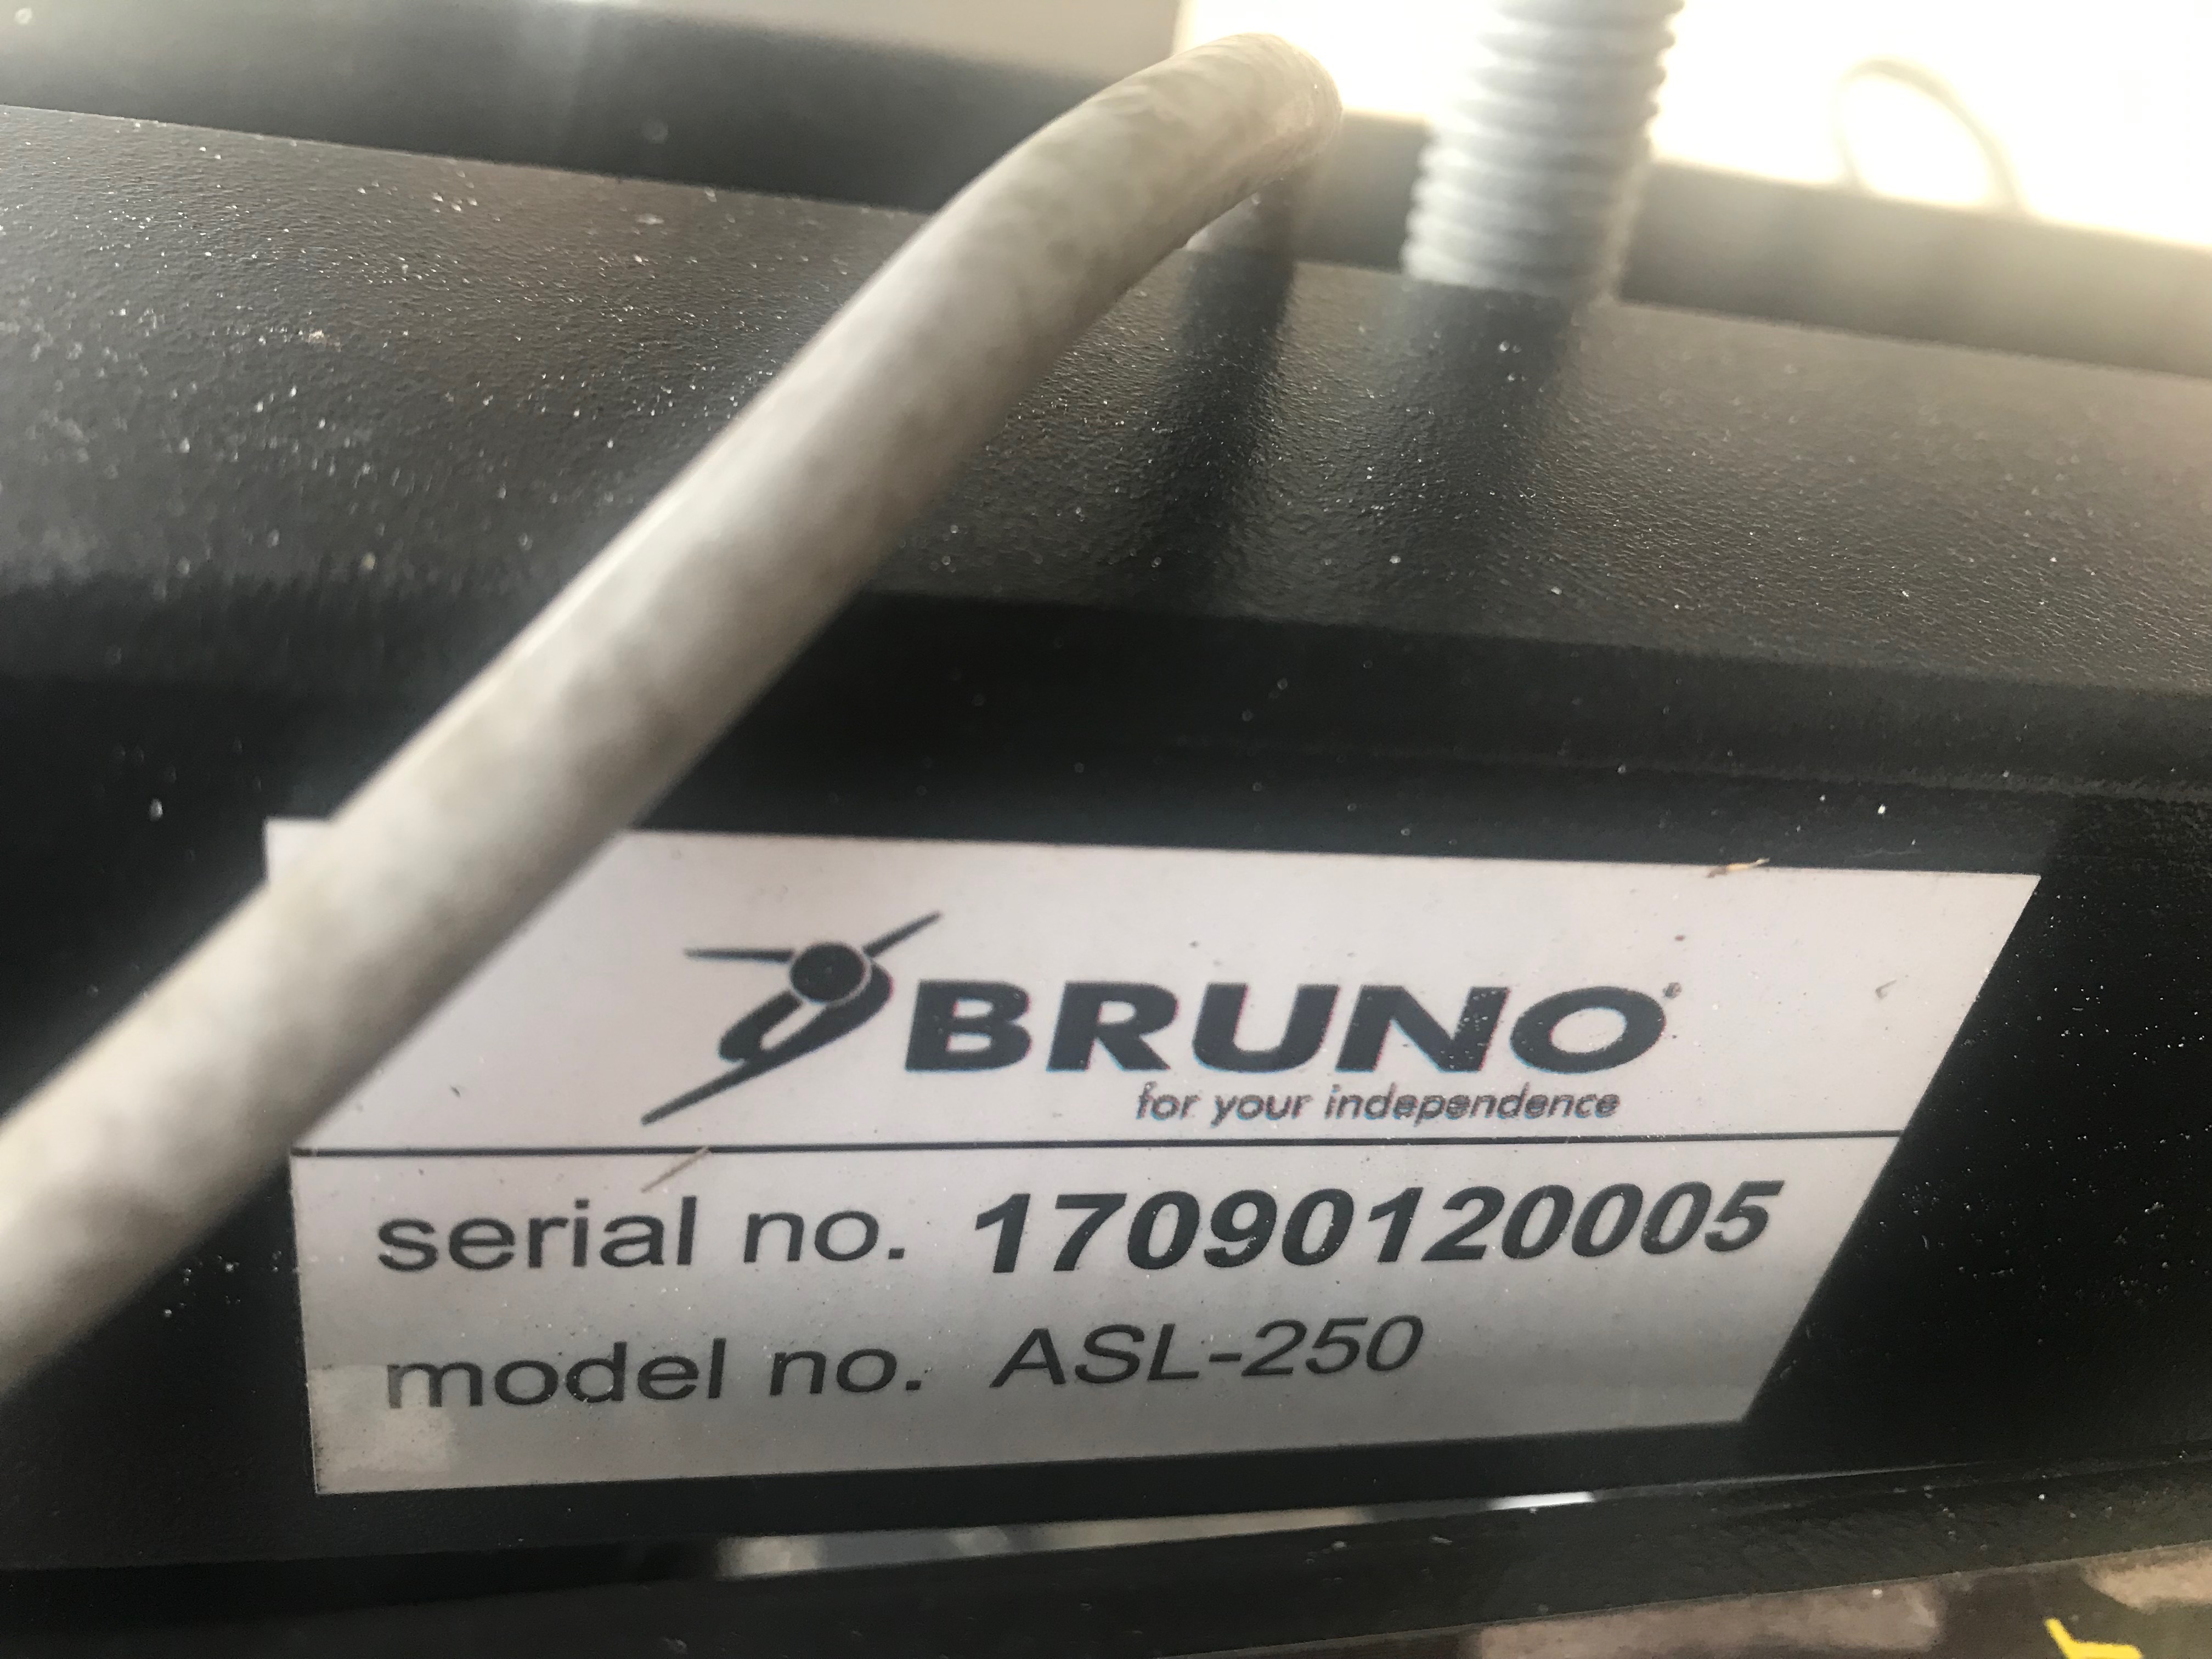 Bruno Asl 250 Owners Manual herevfil